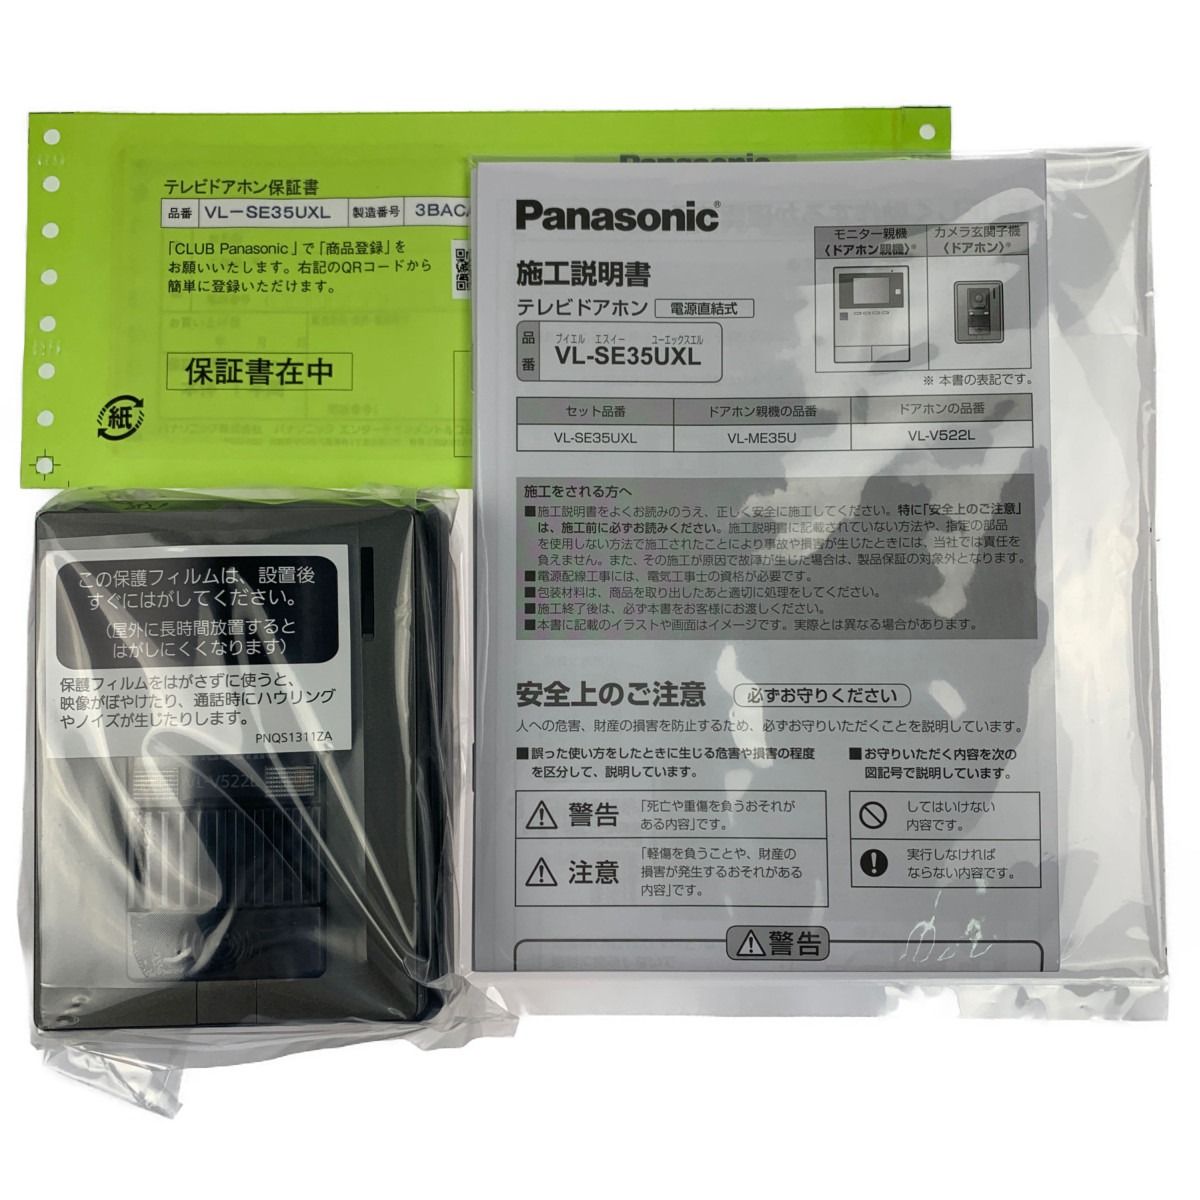 ▽▽ Panasonic パナソニック テレビドアホン 電源直結式 VL-SE35UXL 開封未使用品 未使用に近い 